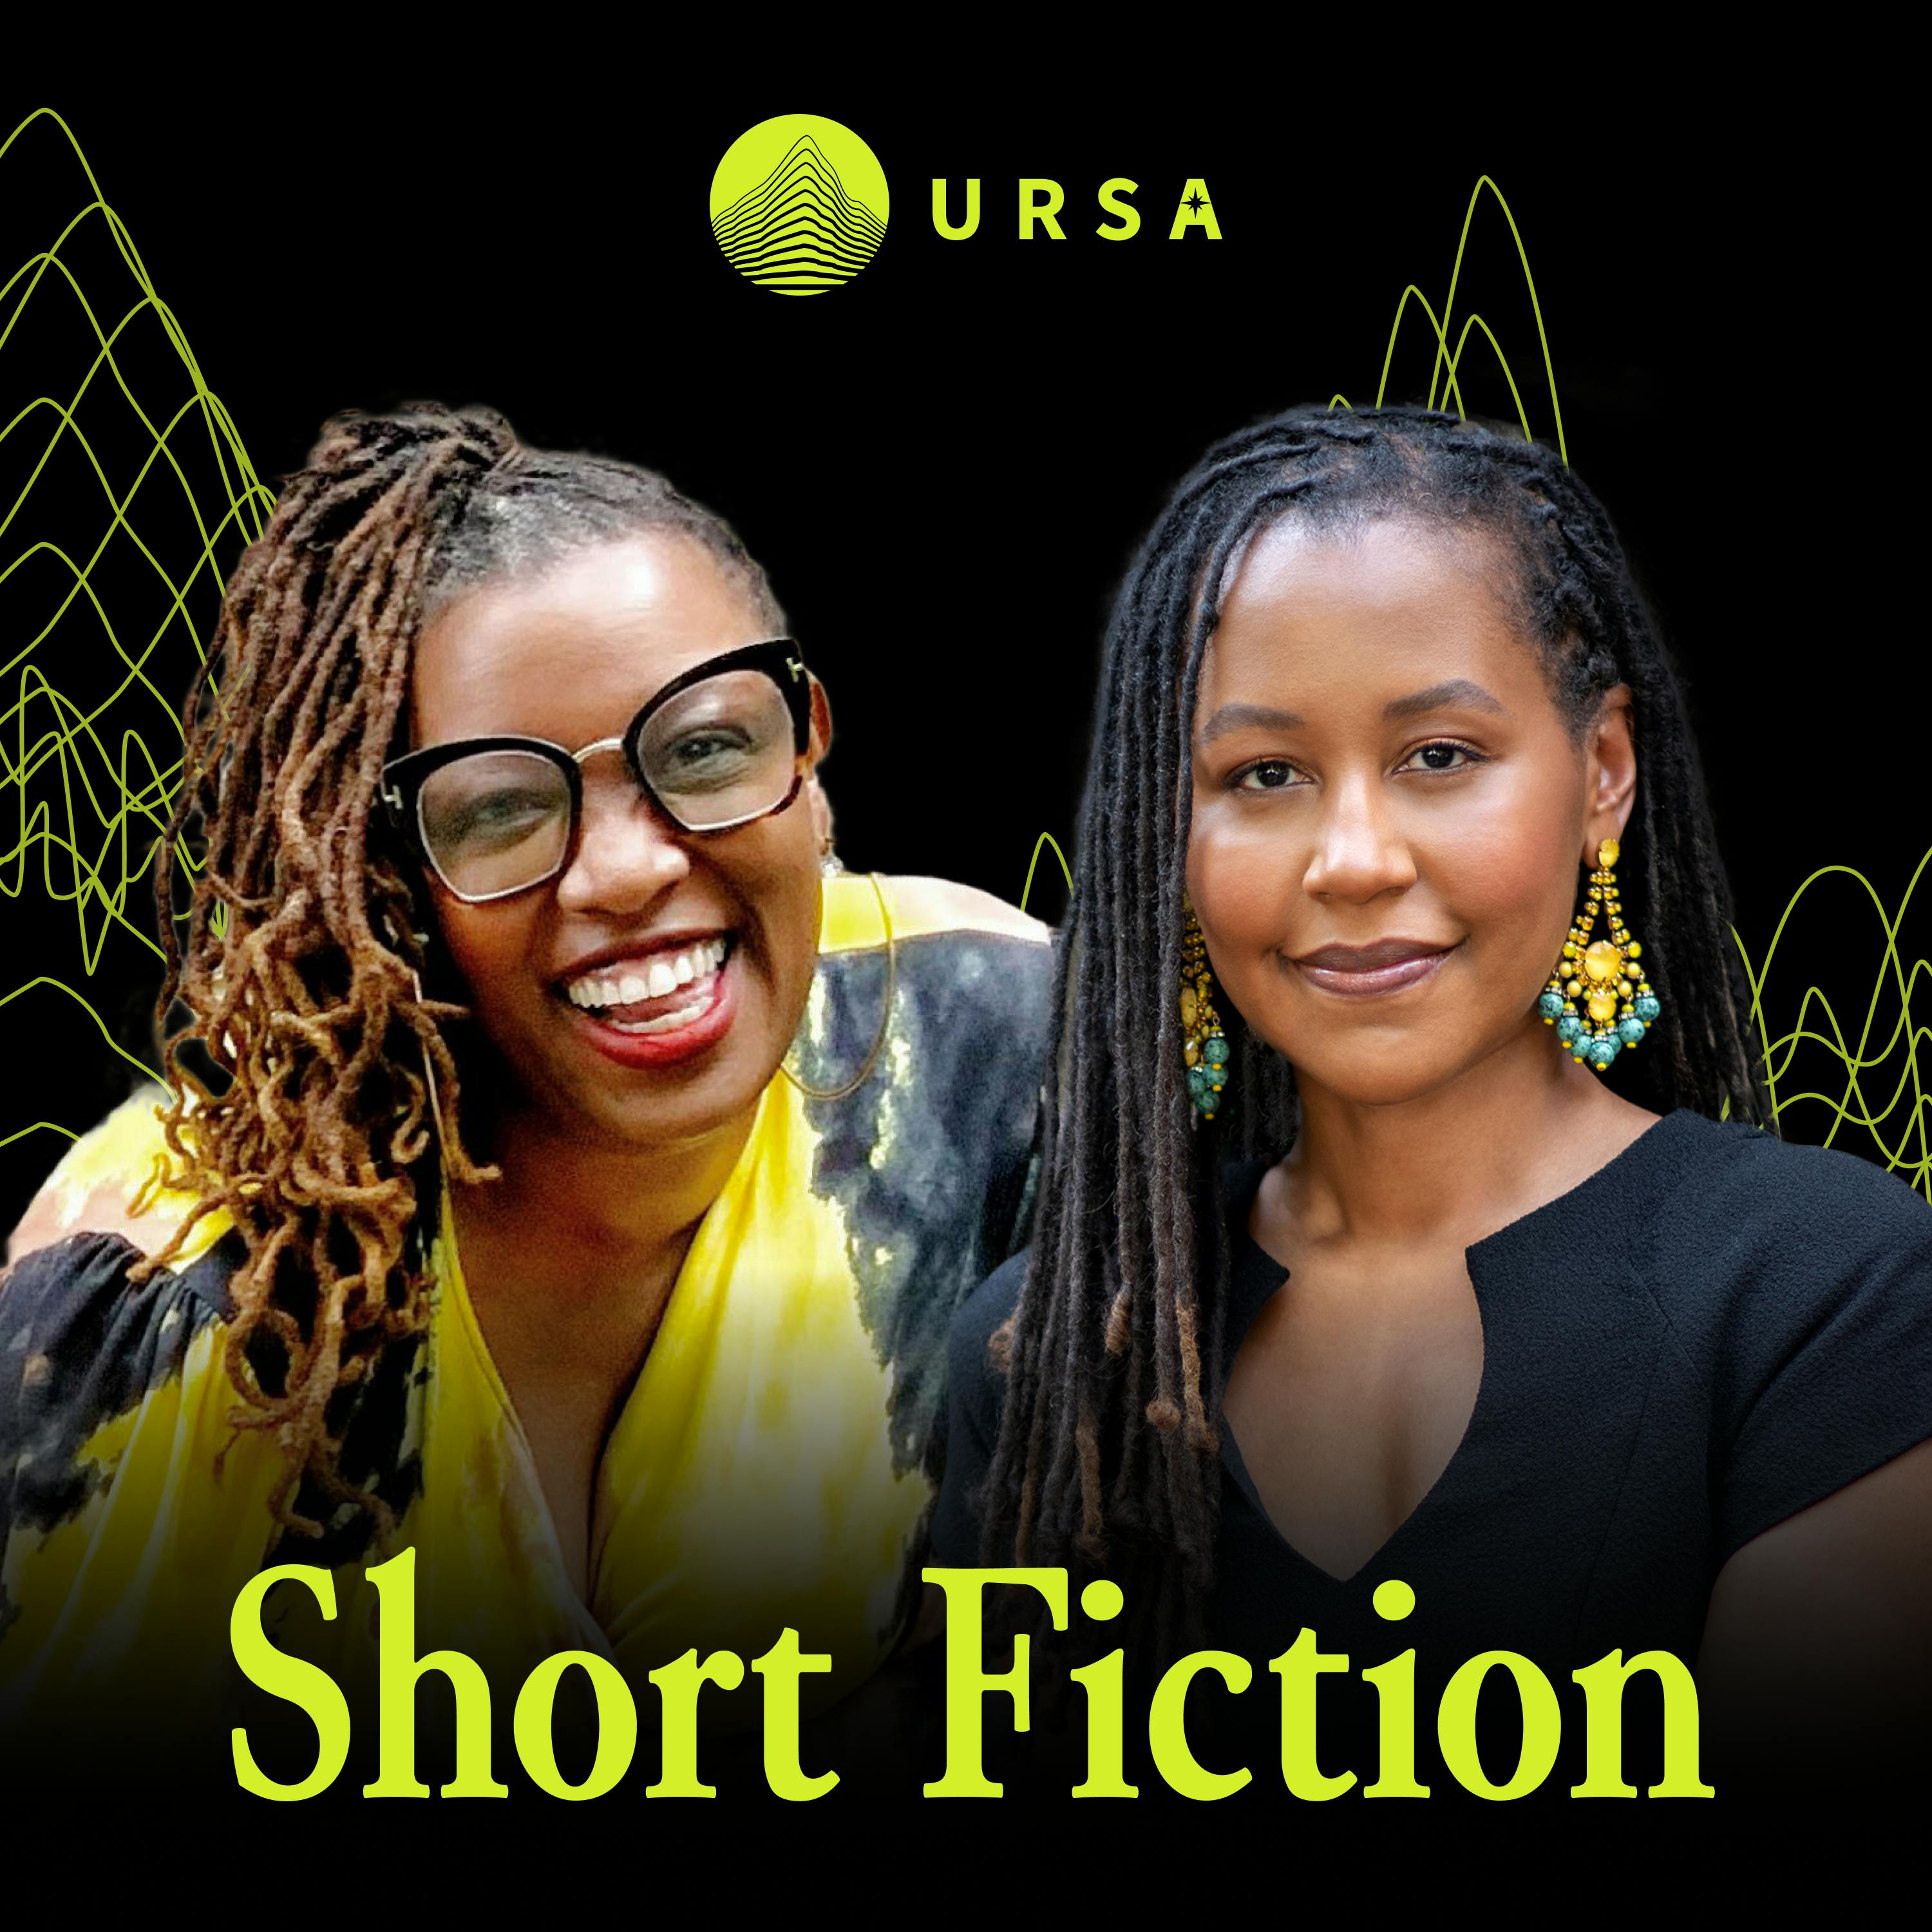 Ursa Short Fiction podcast show image